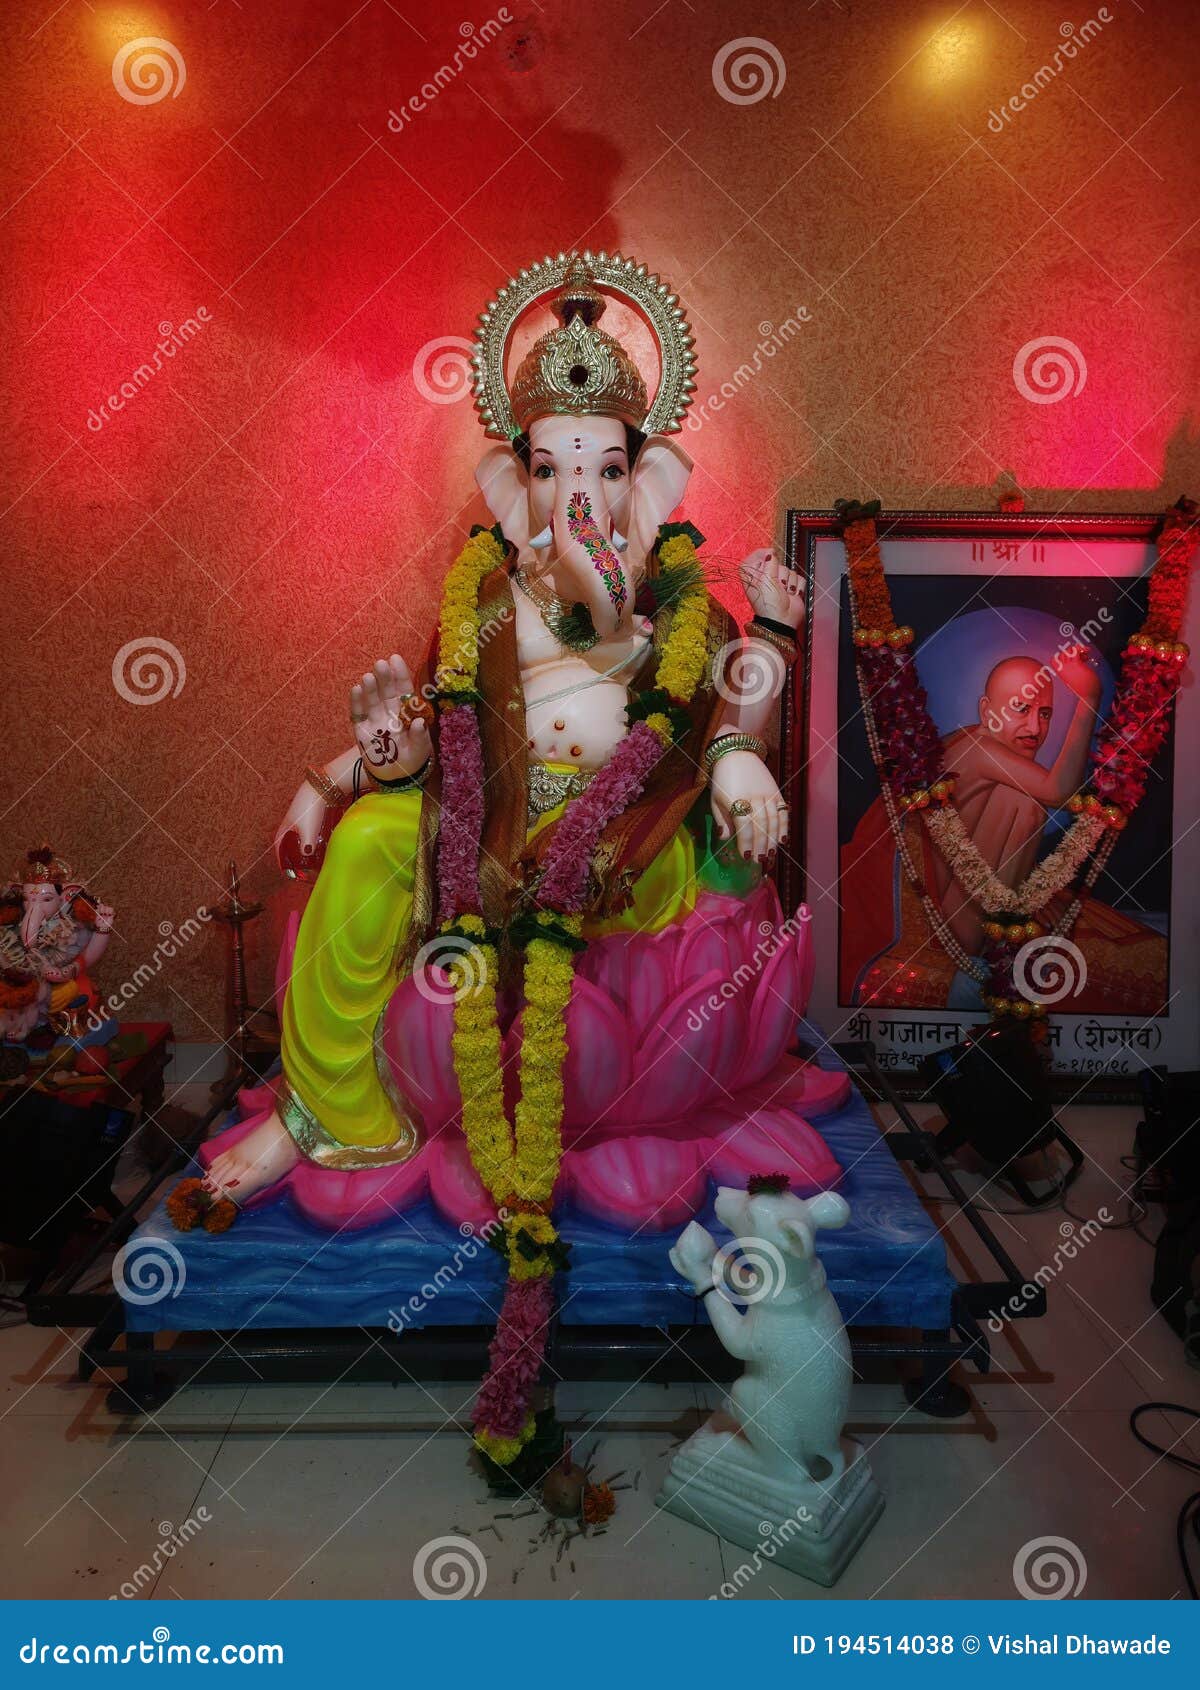 The Beautiful Sculpture of Lord Ganesha Ganpatifestival2020 Narayan ...